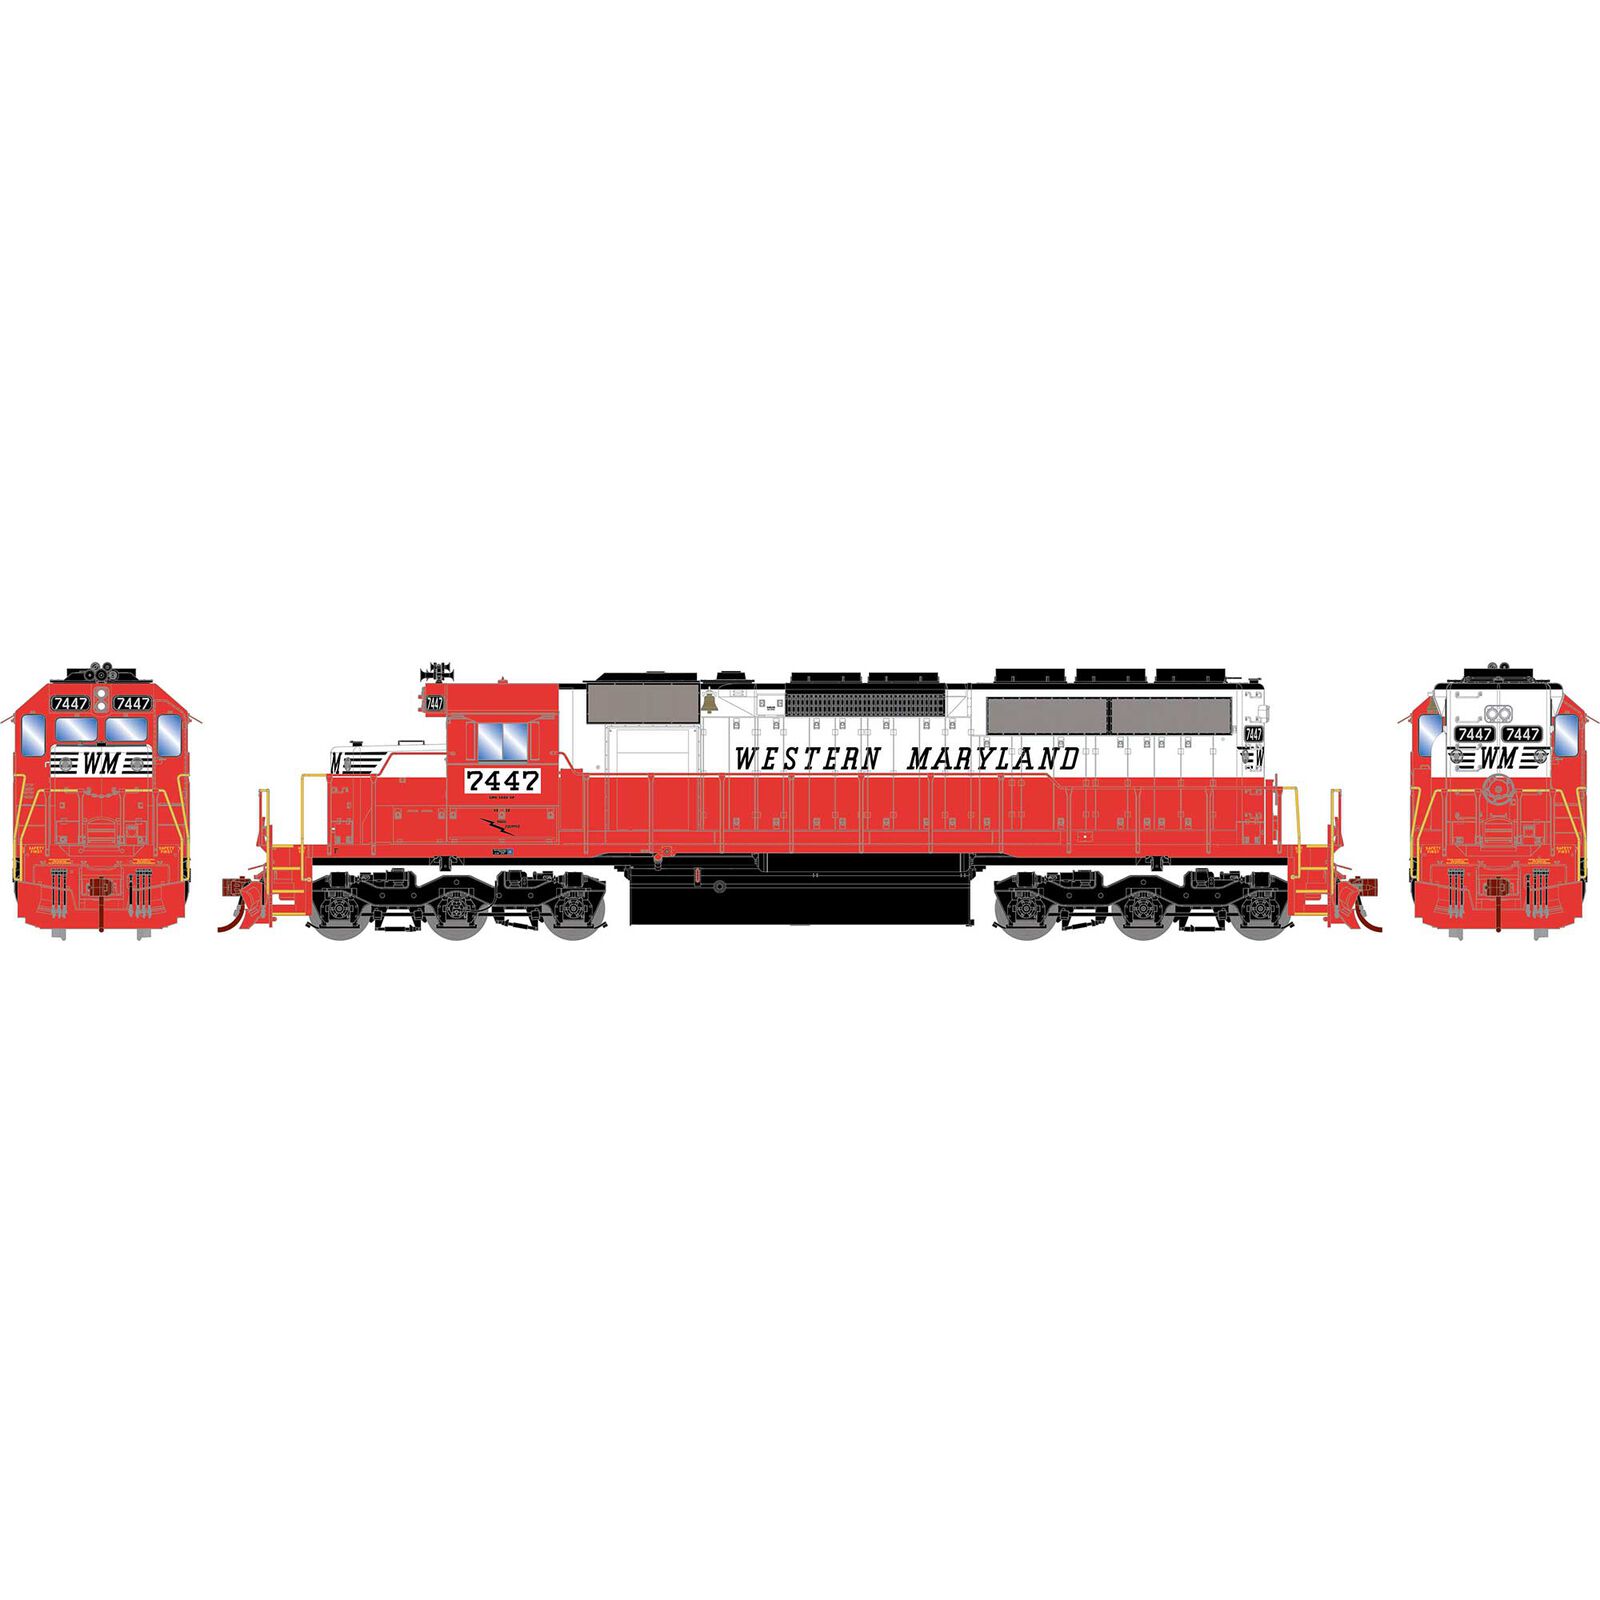 HO SD40 Locomotive with DCC & Sound, Western Maryland #7447